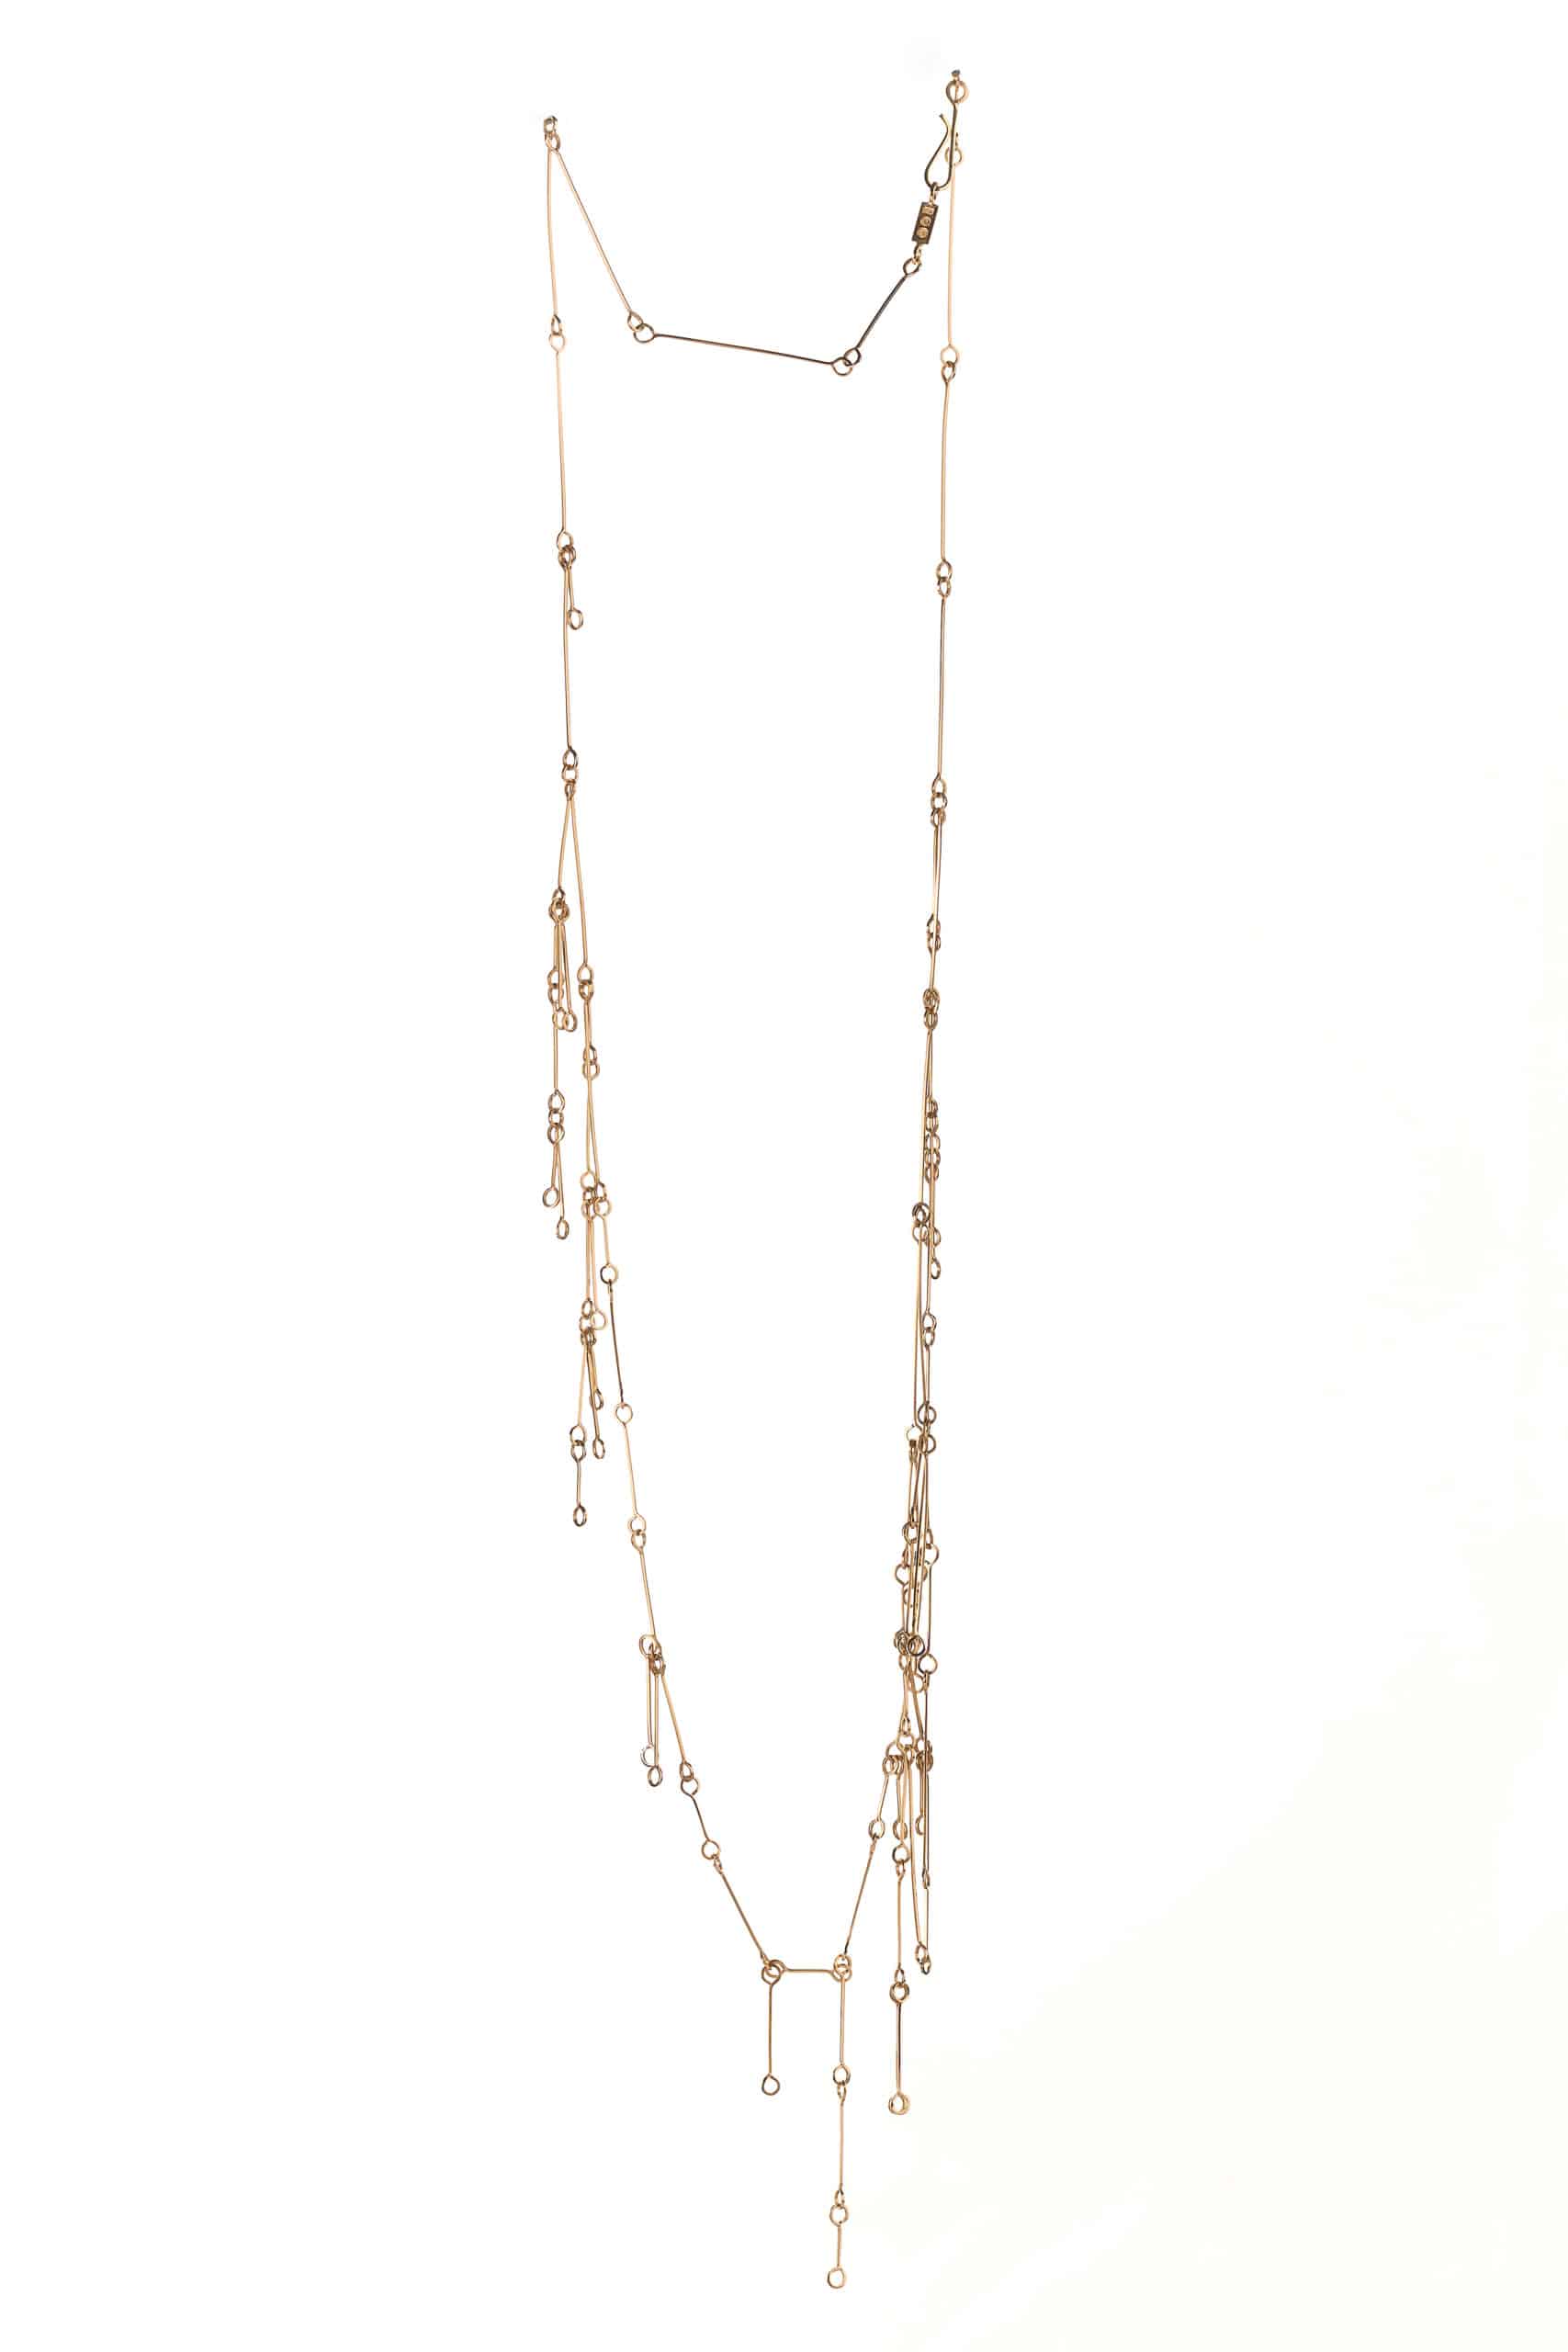 Tree of Life - Necklace - Atelier Bravig